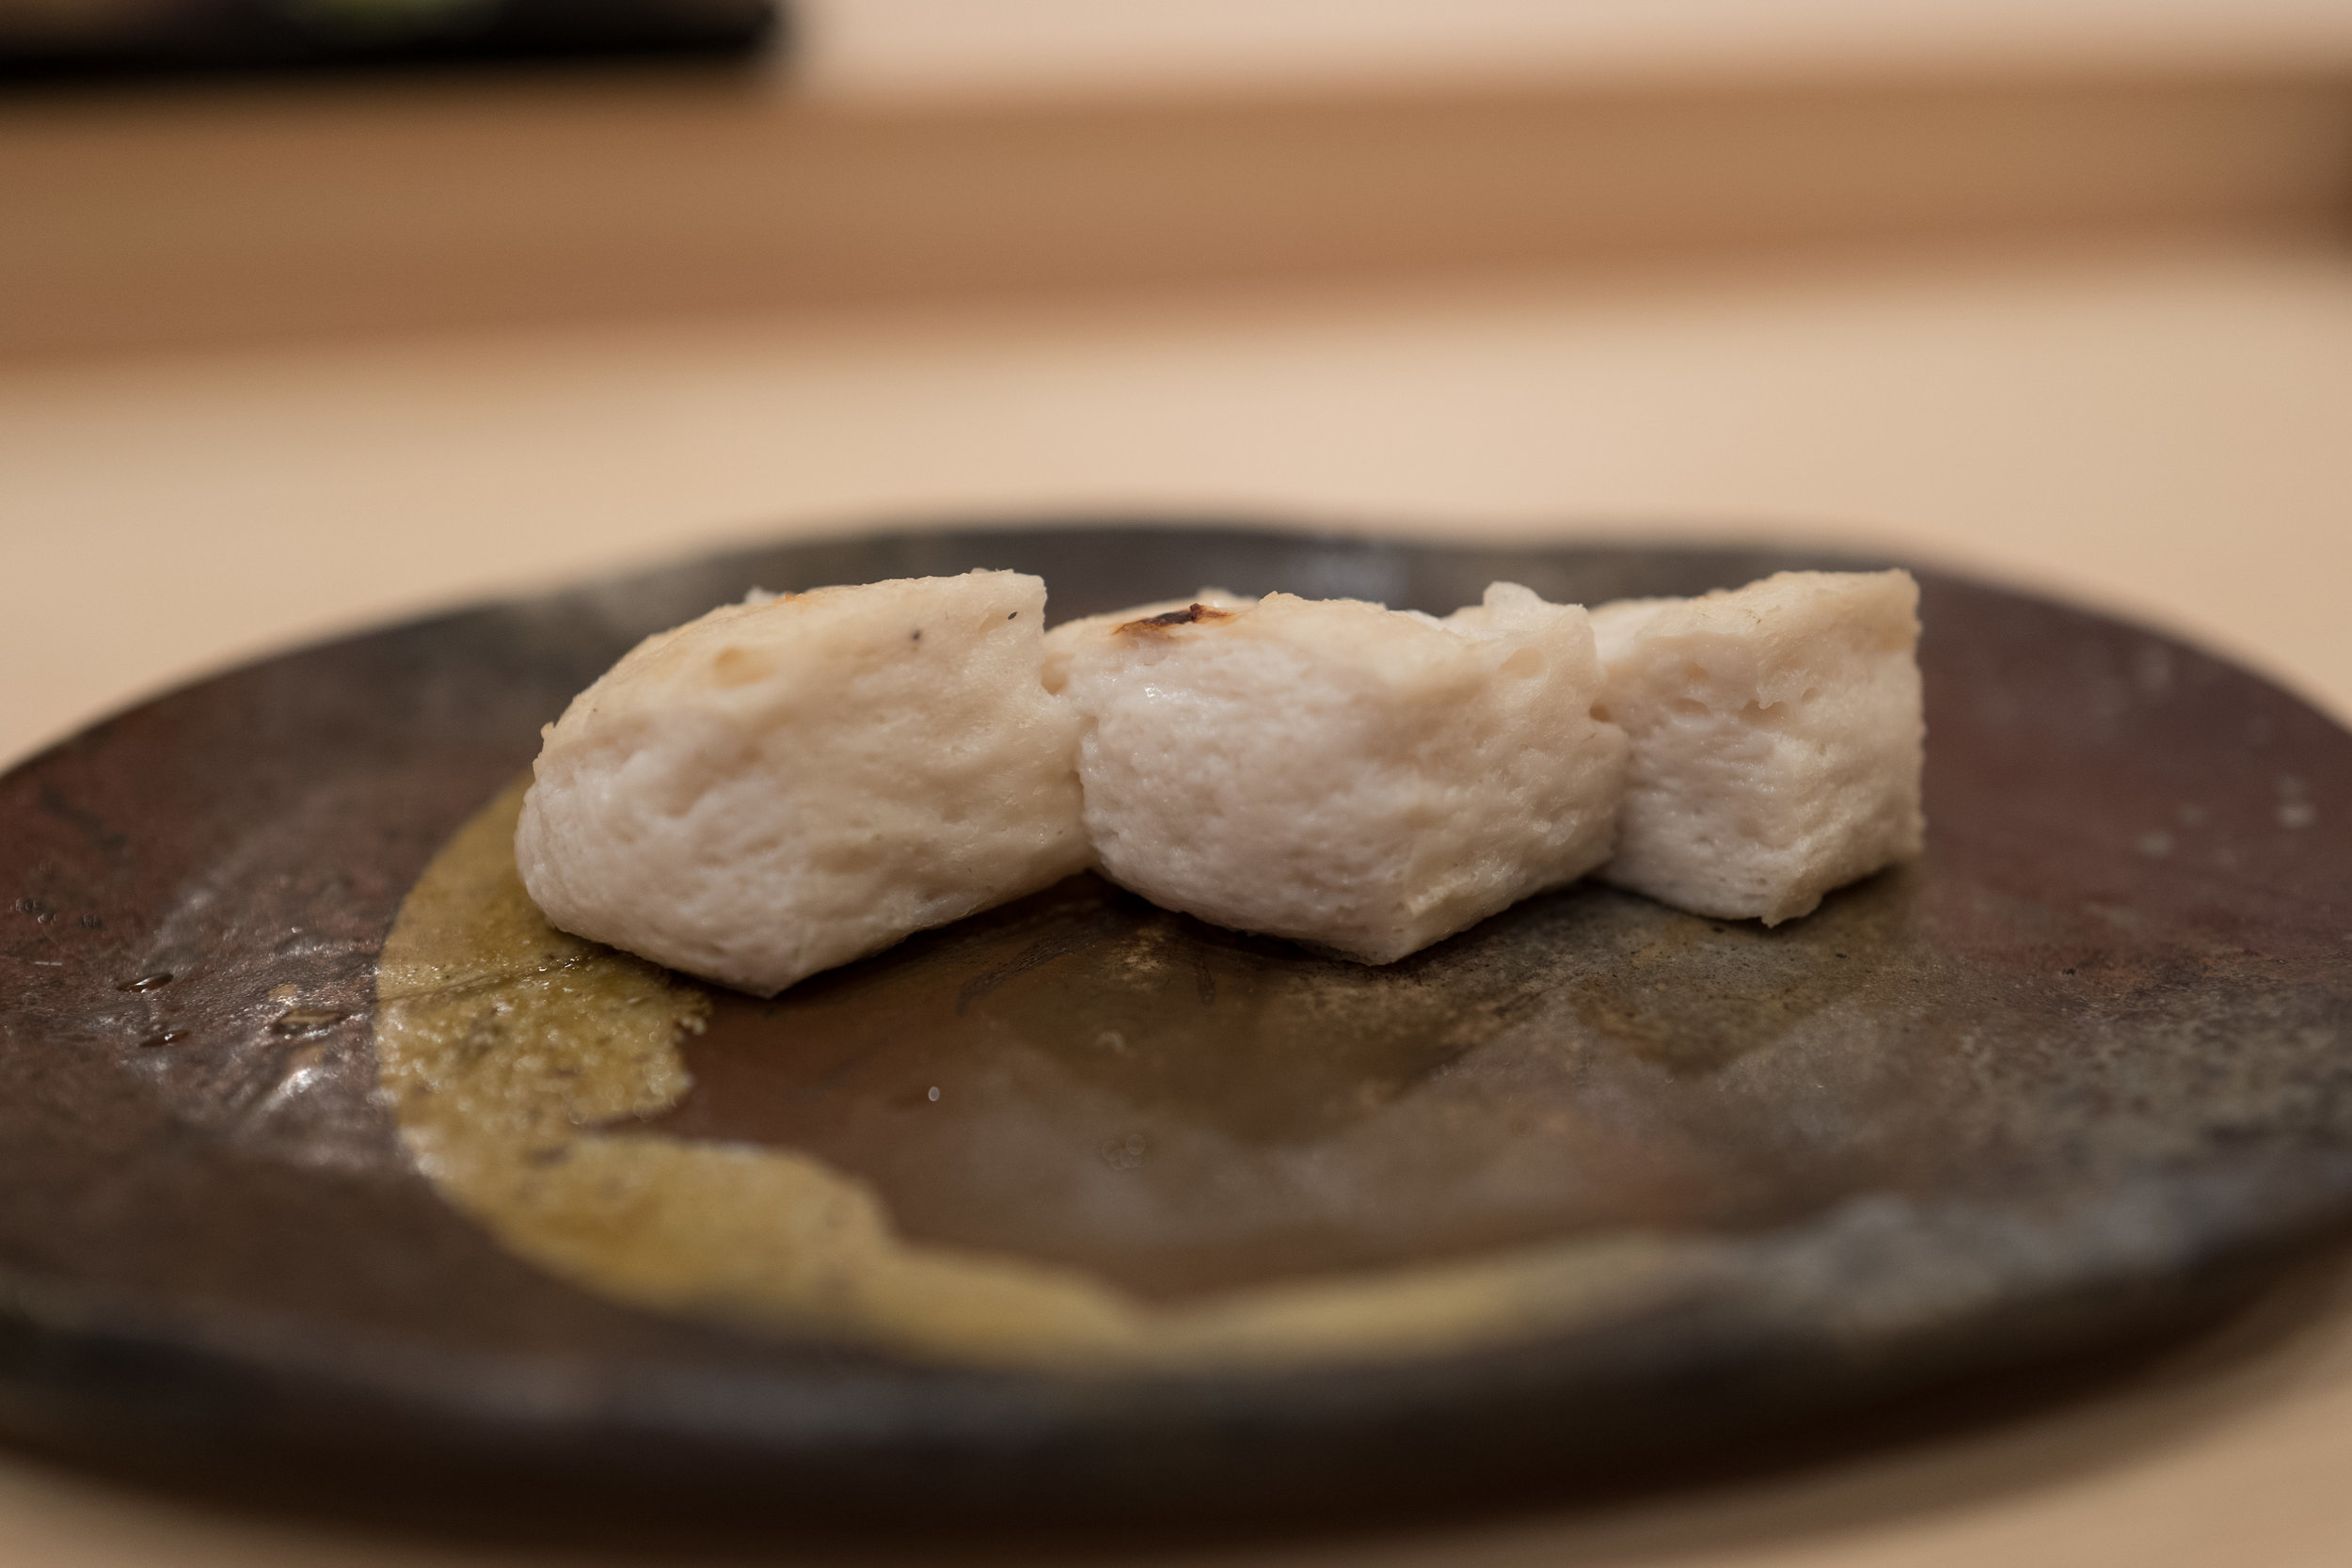  The soufflé-like shirako preparation was one of my favorite otsumami served.&nbsp; 